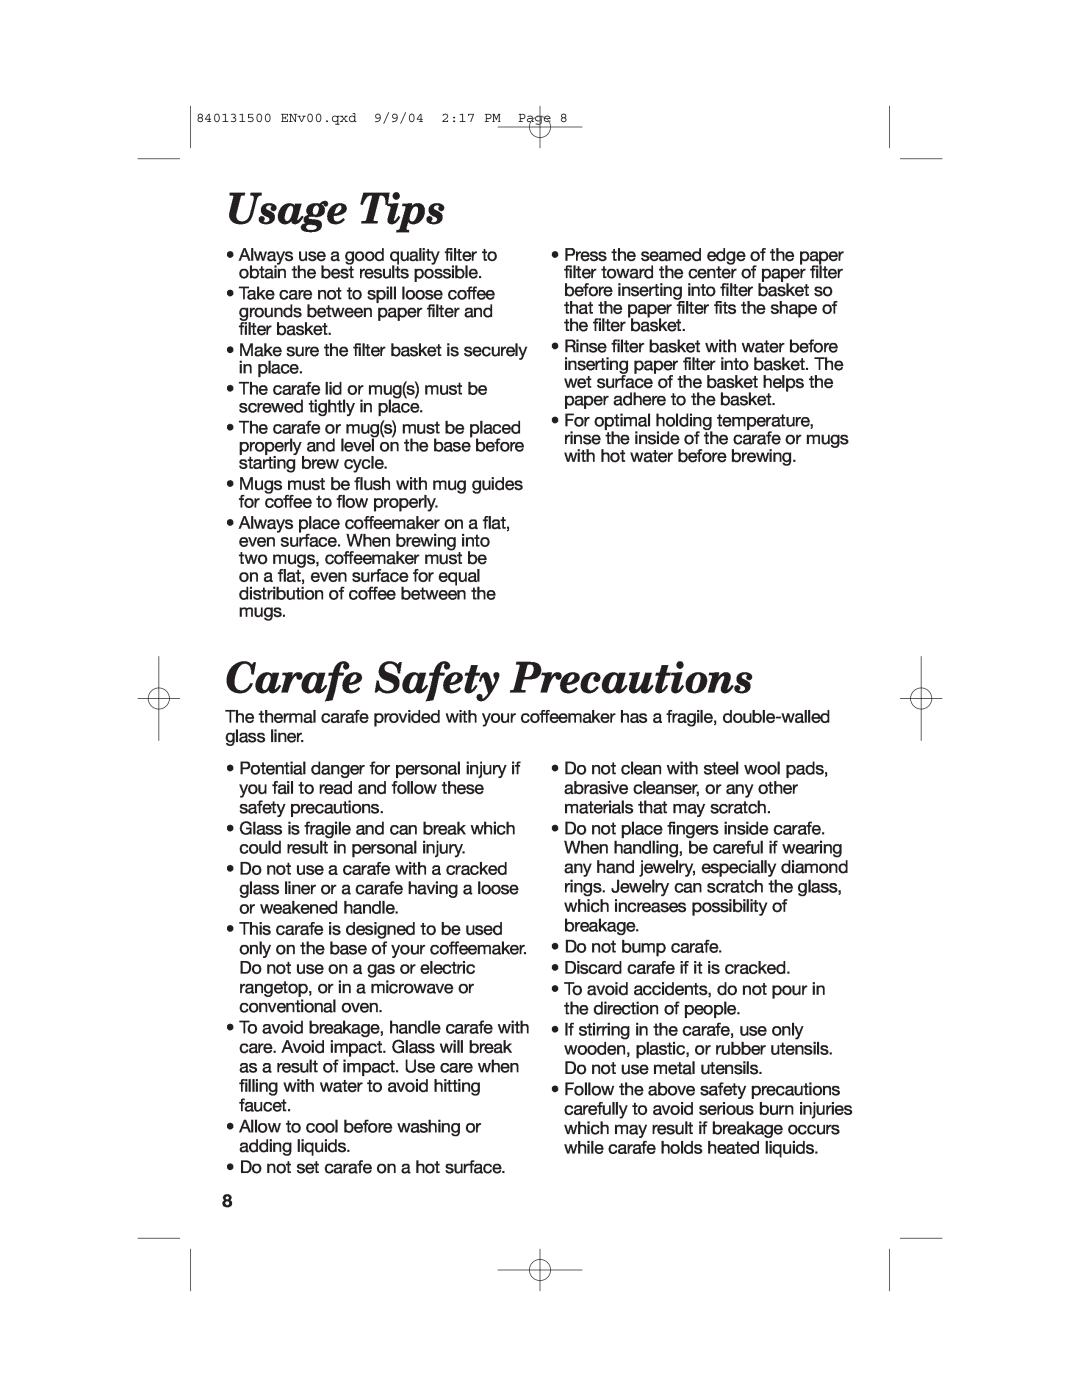 Hamilton Beach 45214, 45114, 45234 manual Usage Tips, Carafe Safety Precautions 